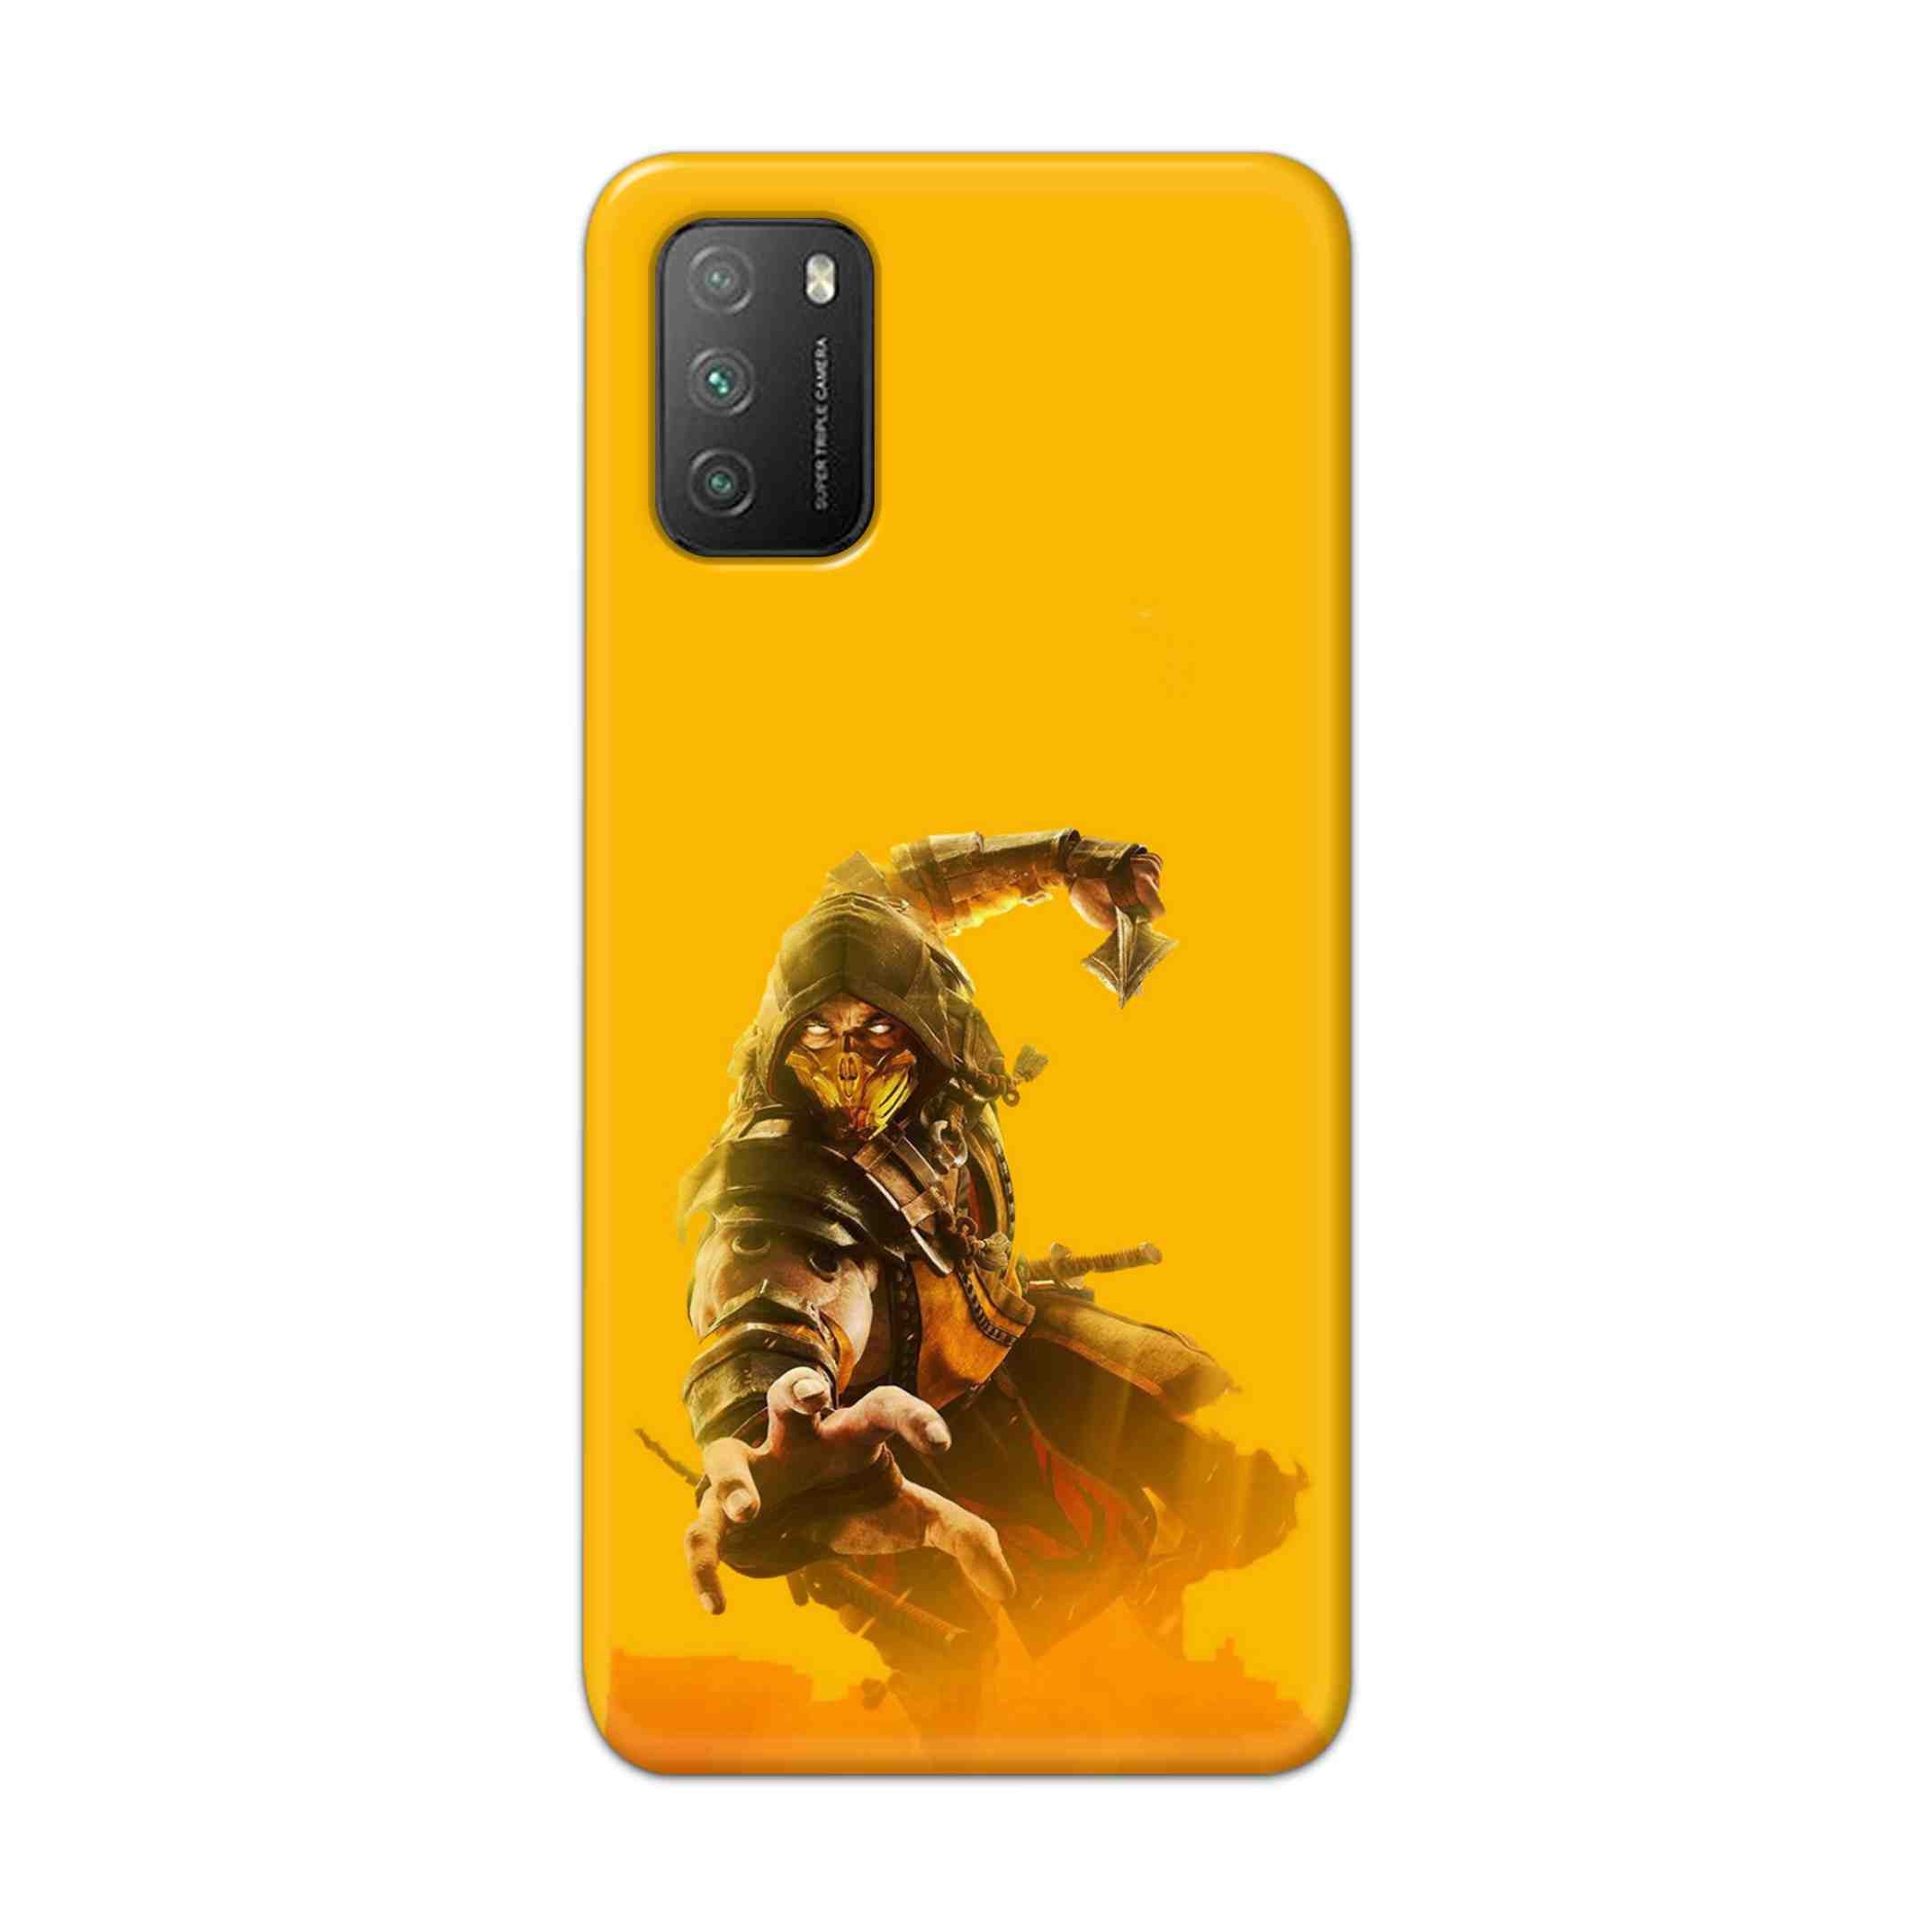 Buy Mortal Kombat Hard Back Mobile Phone Case Cover For Poco M3 Online